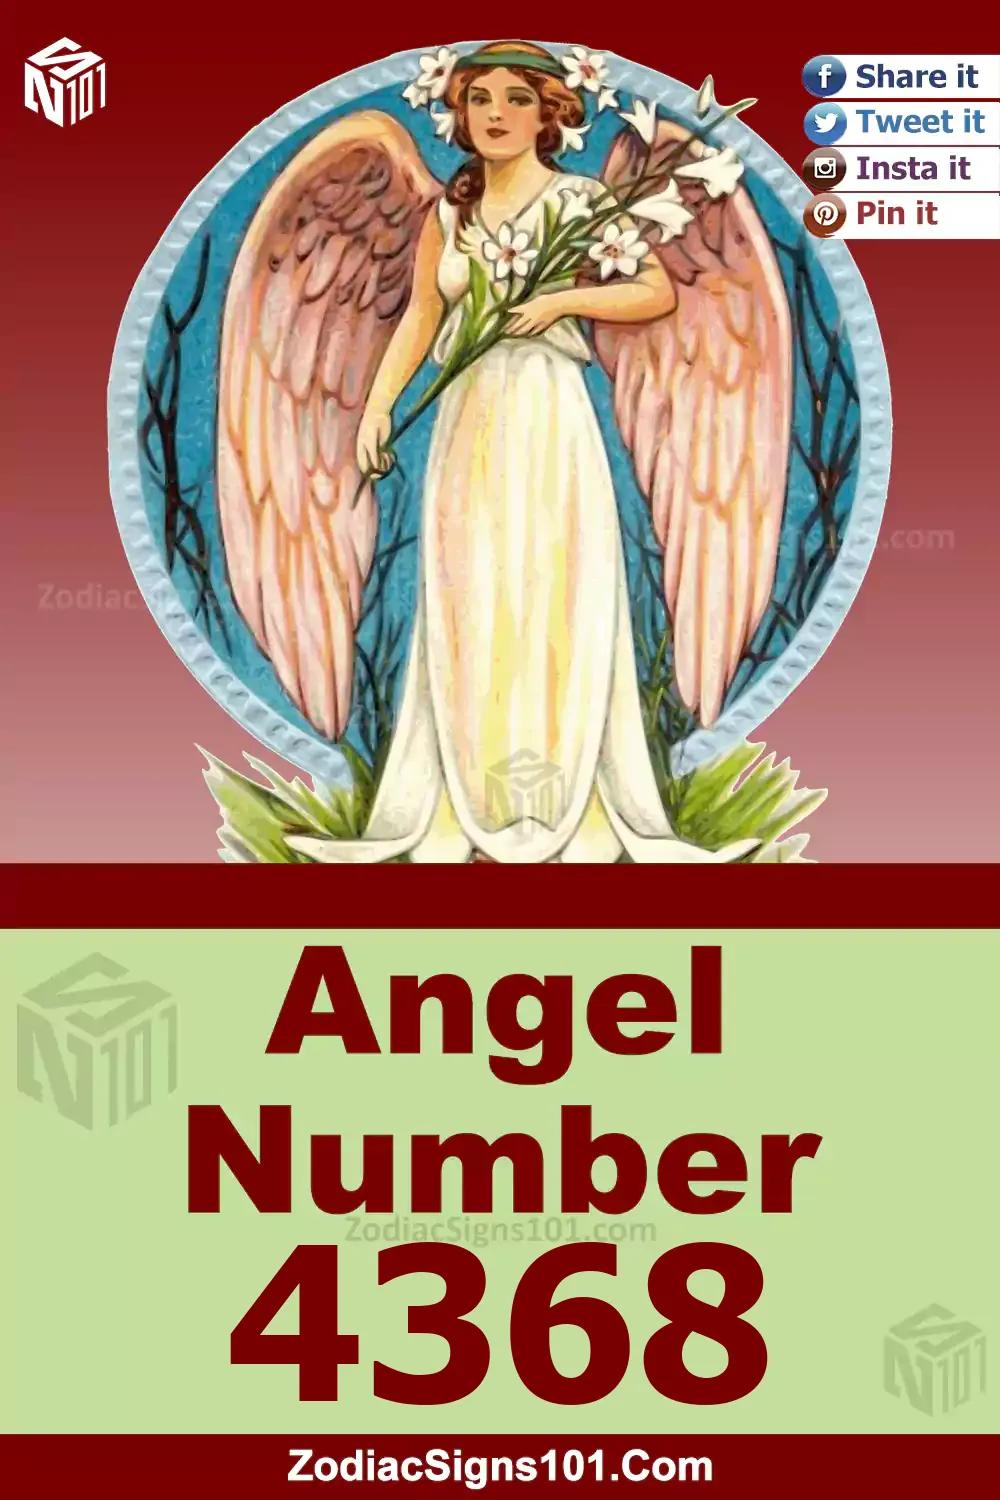 4368-Angel-Number-Meaning.jpg